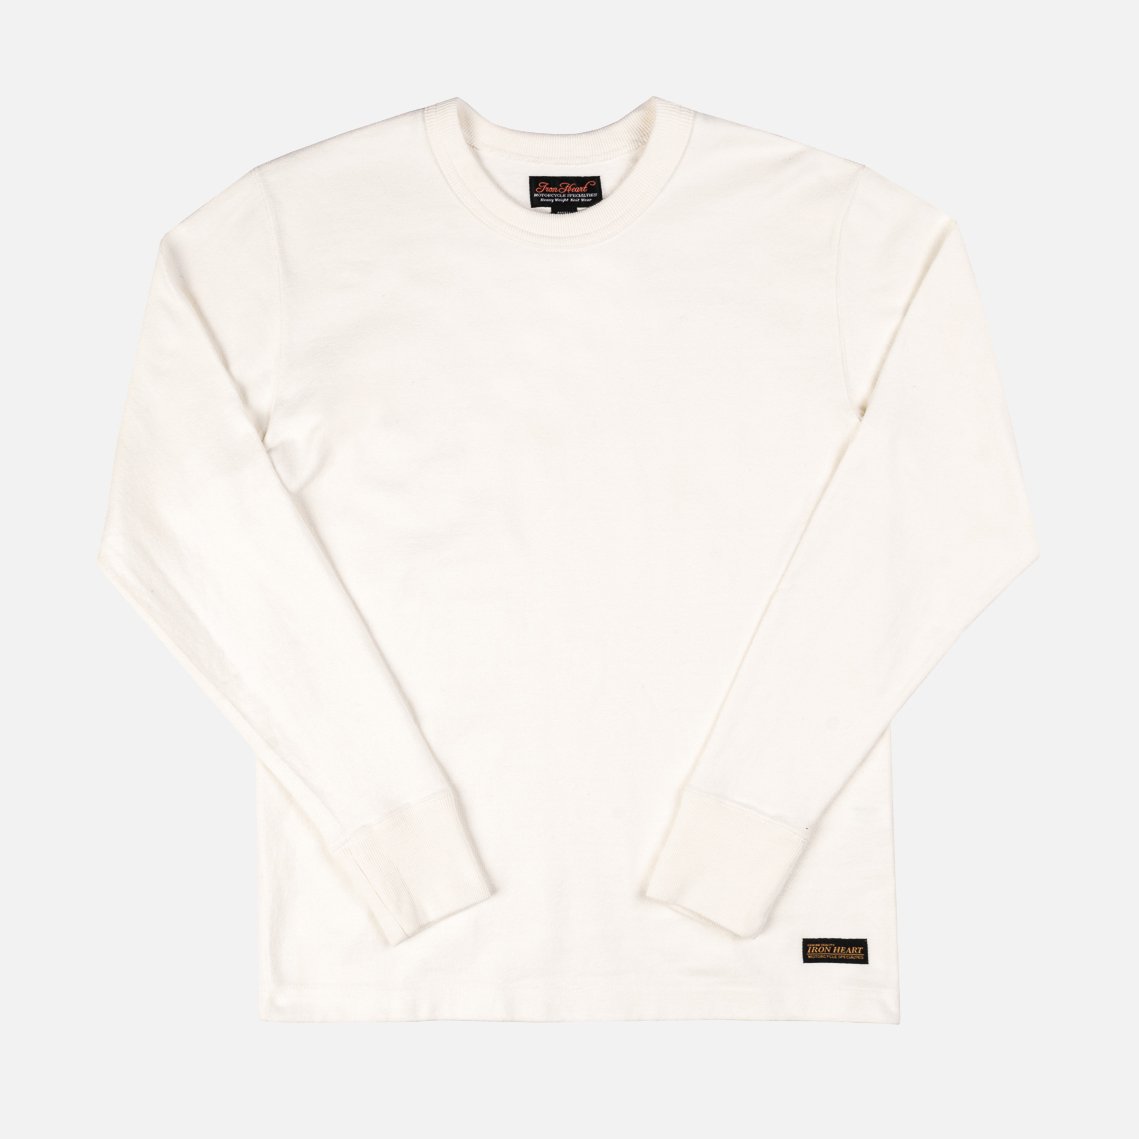 IHTL-1501-WHT 11oz Cotton Knit Crewneck Sweater White